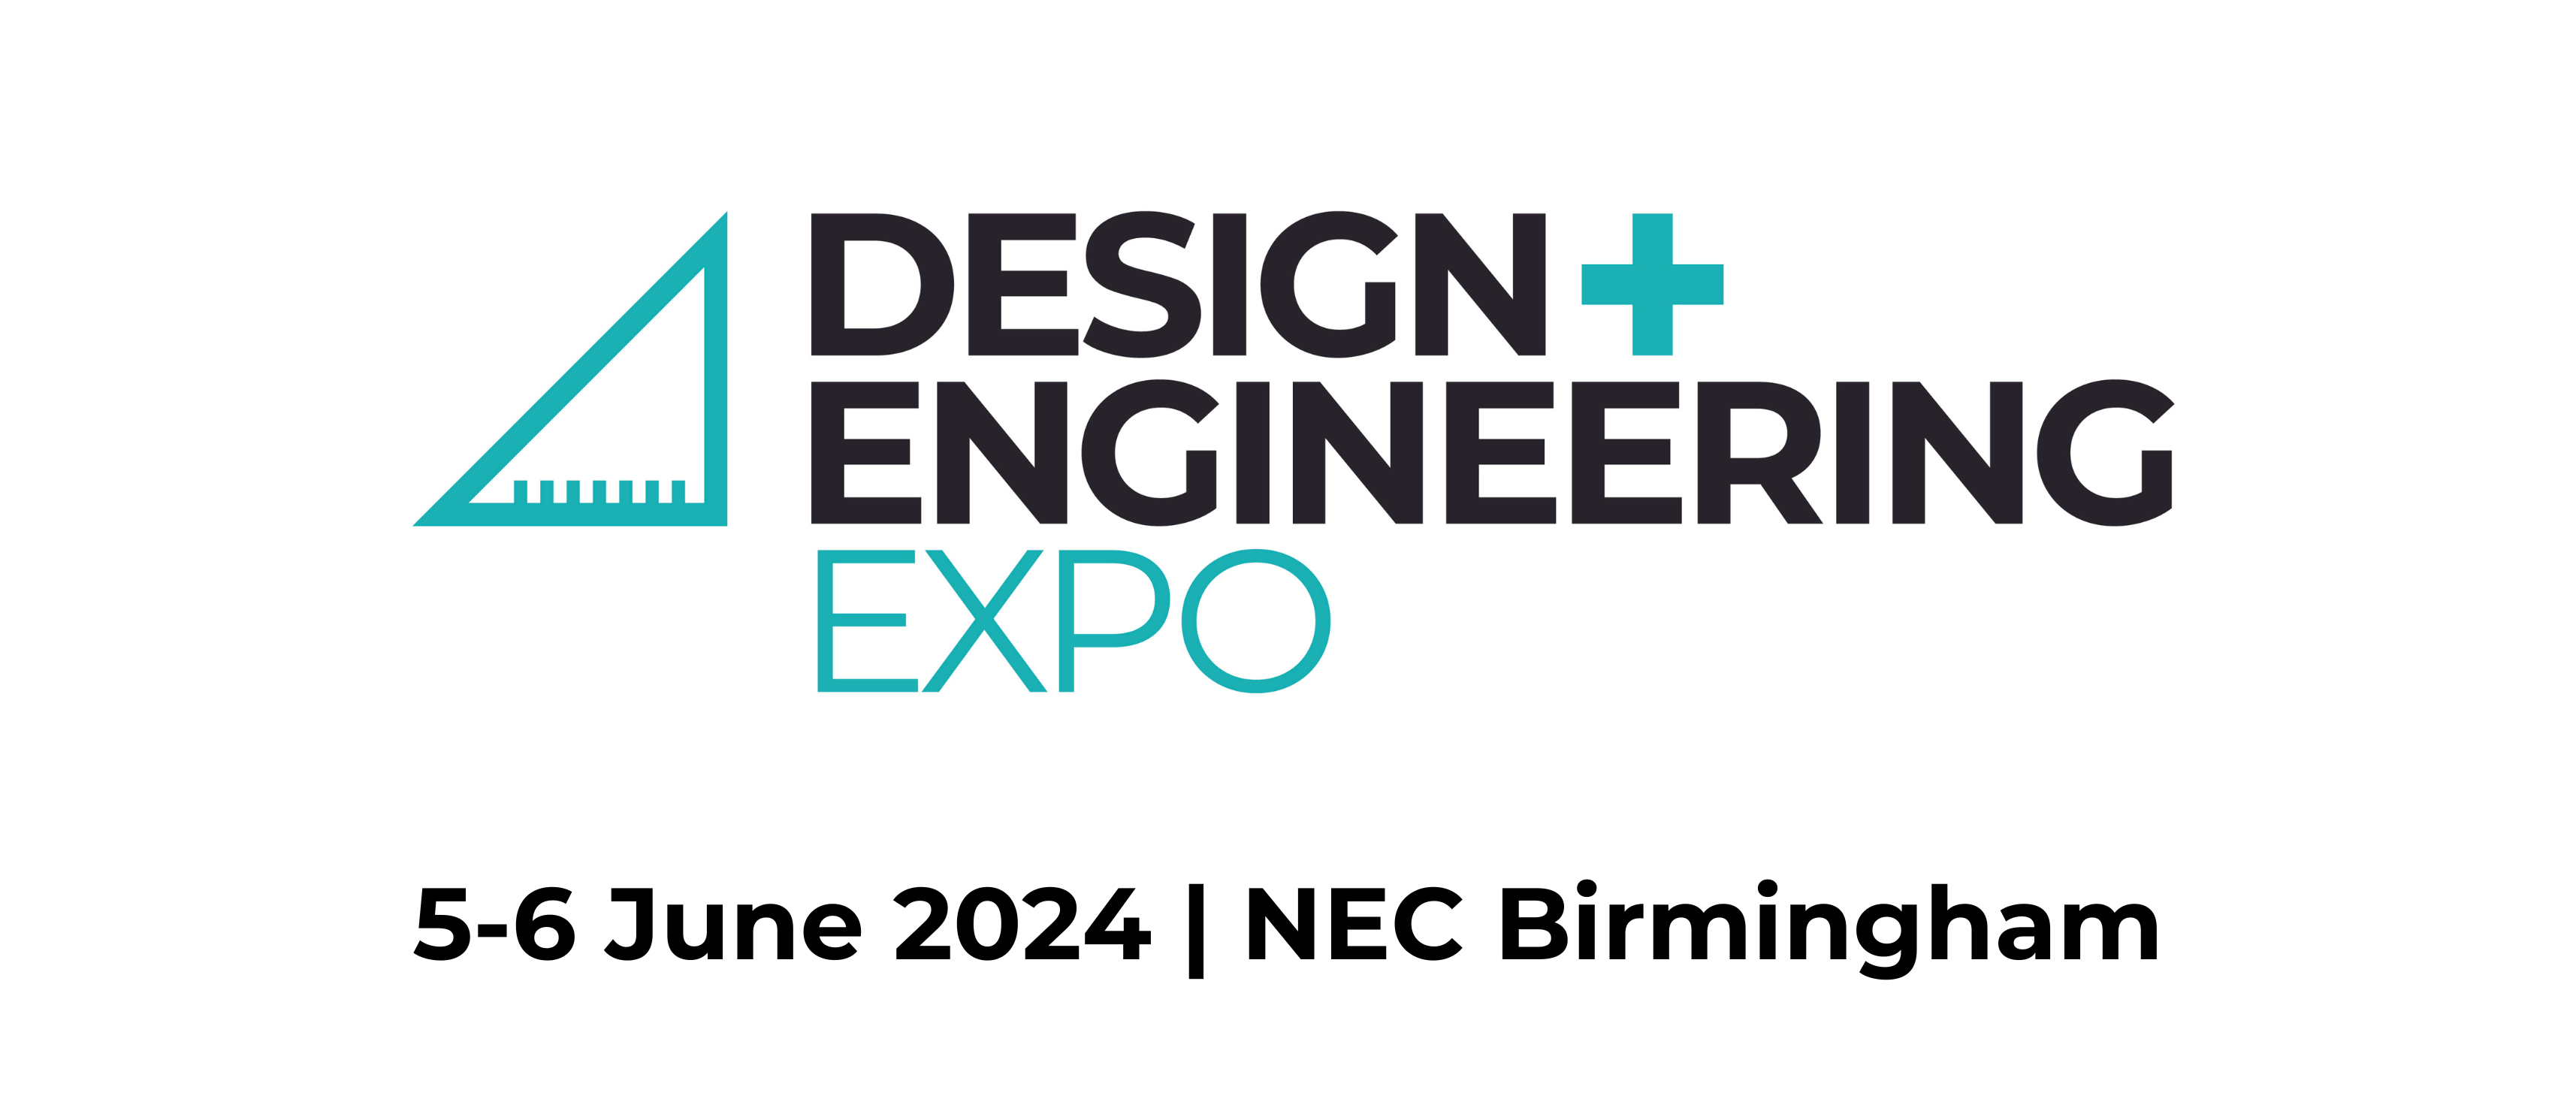 Design & Engineering Expo